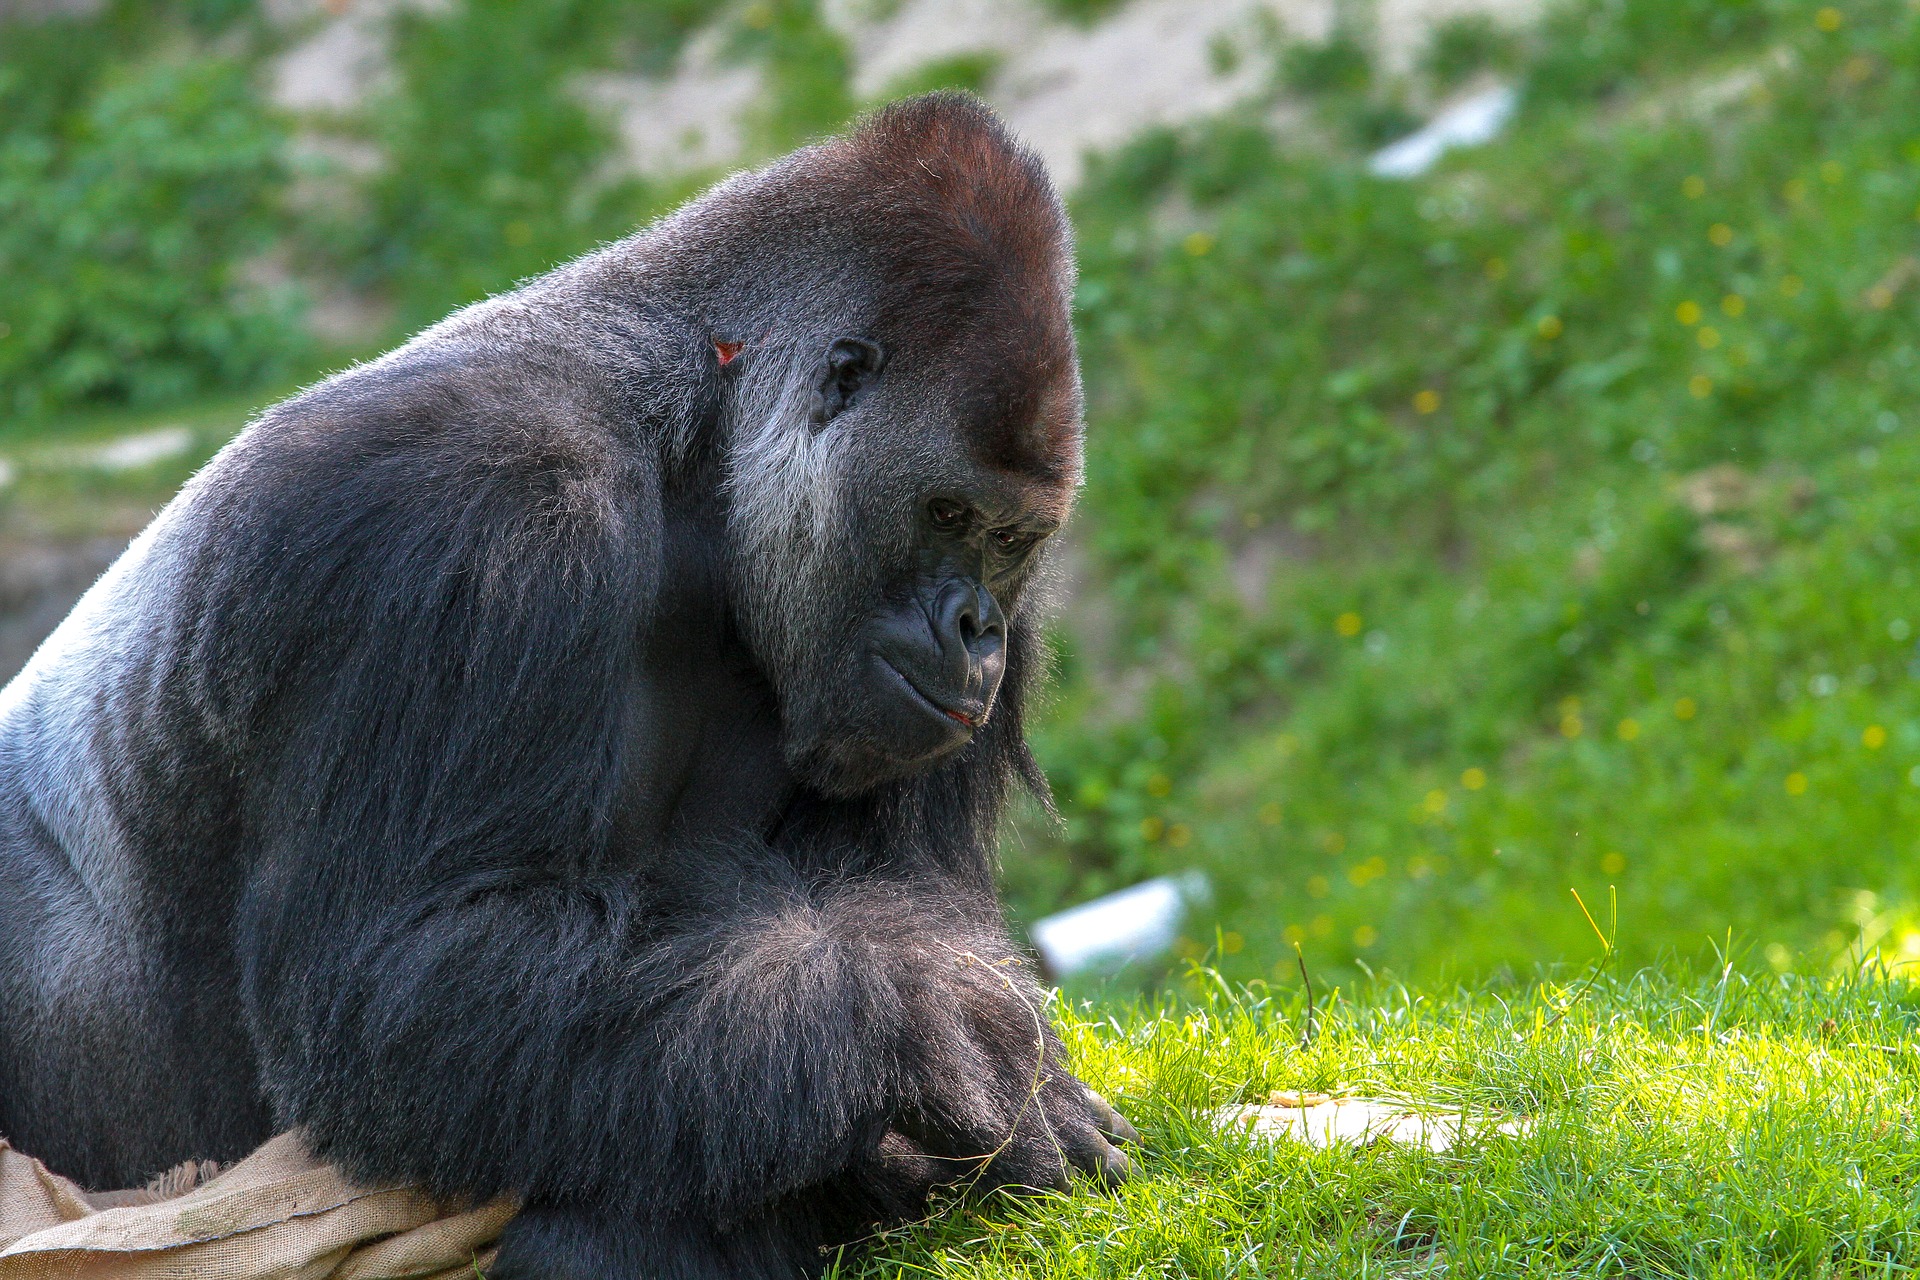 Detectan a un grupo de gorilas contagiados de COVID-19 en zoológico de EU